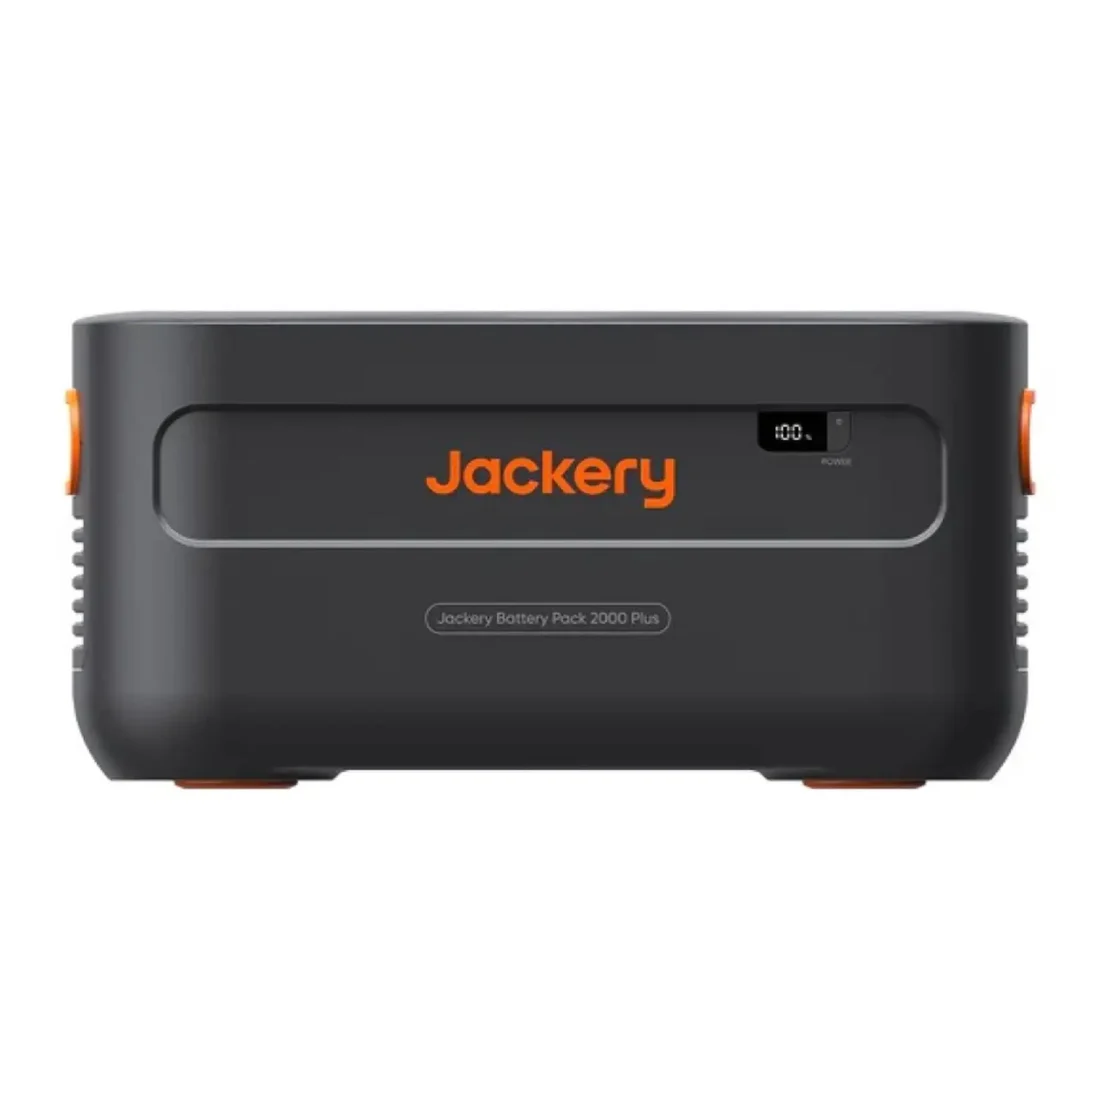 Jackery Explorer 2000 Plus + 5X Jackery Battery Pack 2000 Plus + 6X SolarSaga 200W